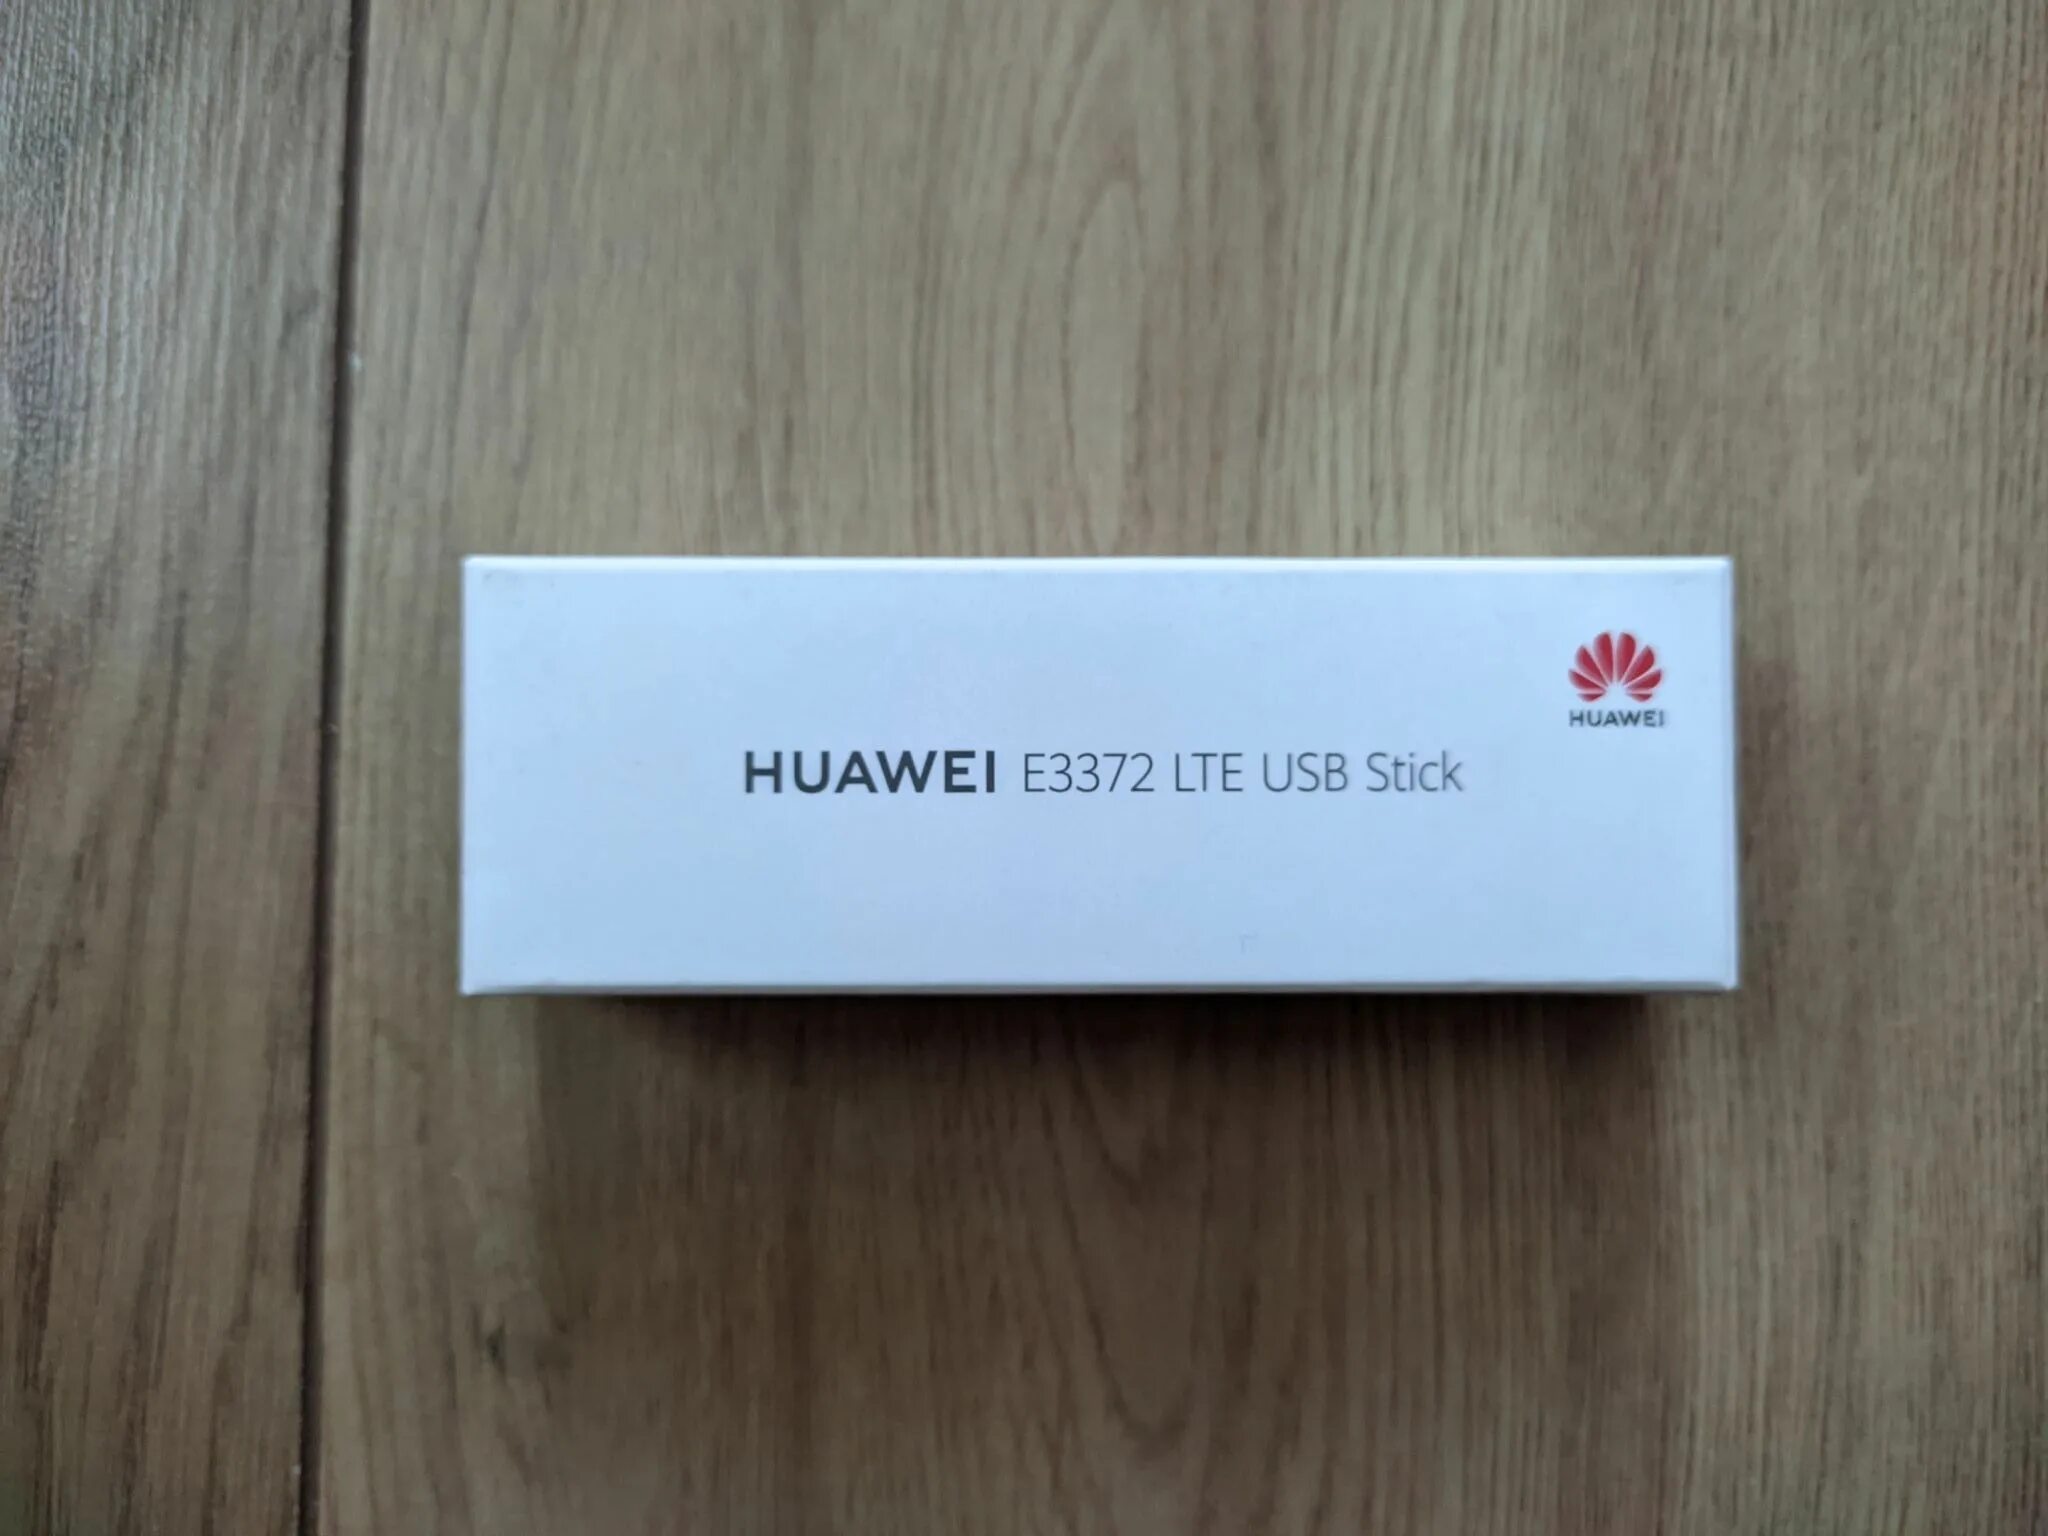 Huawei e3372h 320. 3g/4g модем Huawei e3372h-320. 4g модем Huawei 3372h. Huawei e3372h-320 WIFIRE Turbo. Модем Huawei e3372h-320 3g/4g, внешний, черный [51071sua].